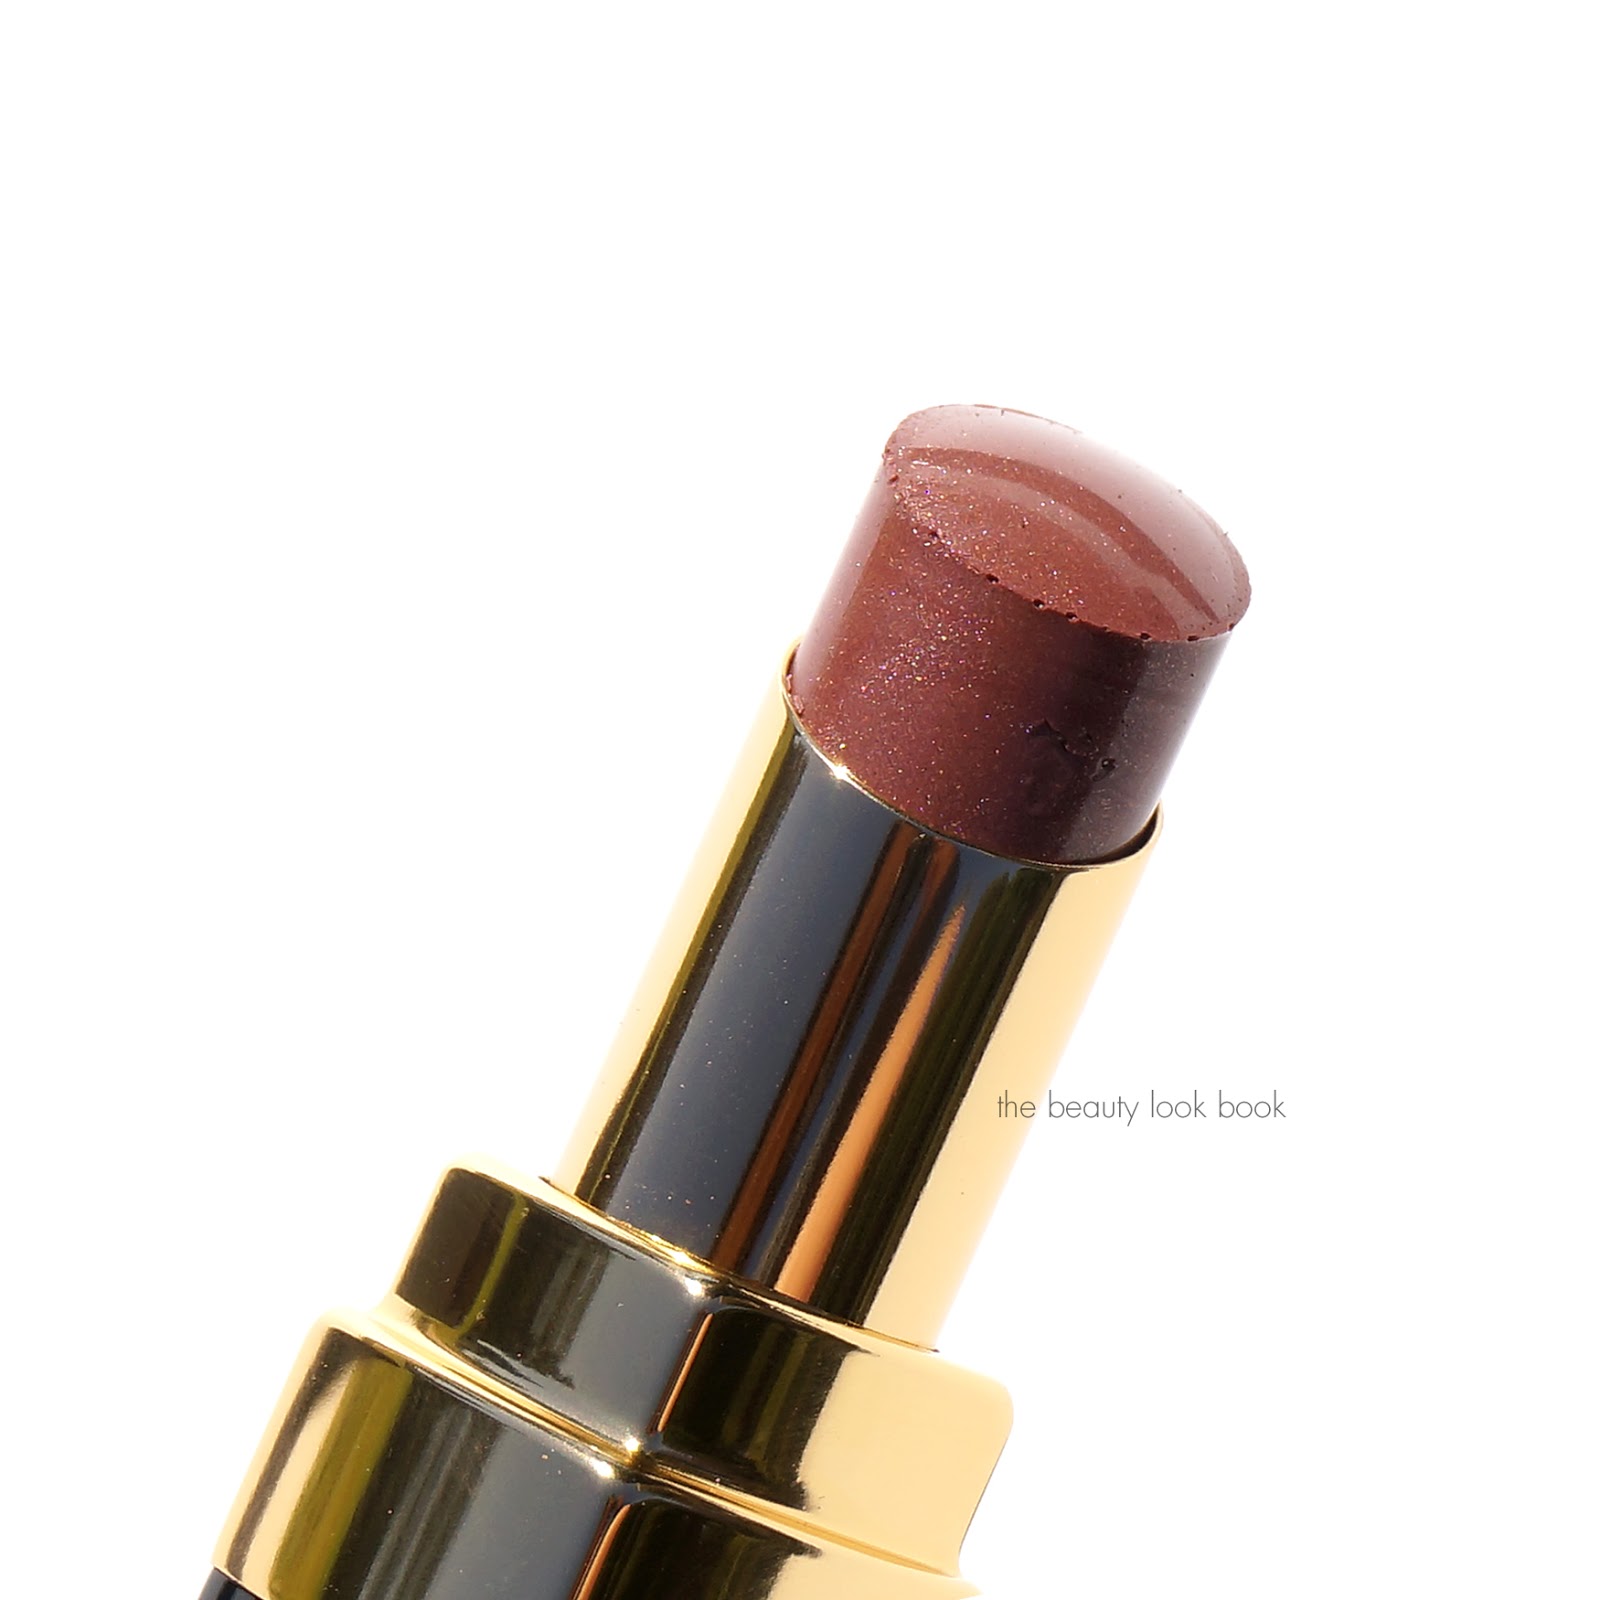 Chanel Collection Méditerannée Summer 2015 Rouge Coco Shines: Intrépide,  Amorosa, Rêveuse - The Beauty Look Book